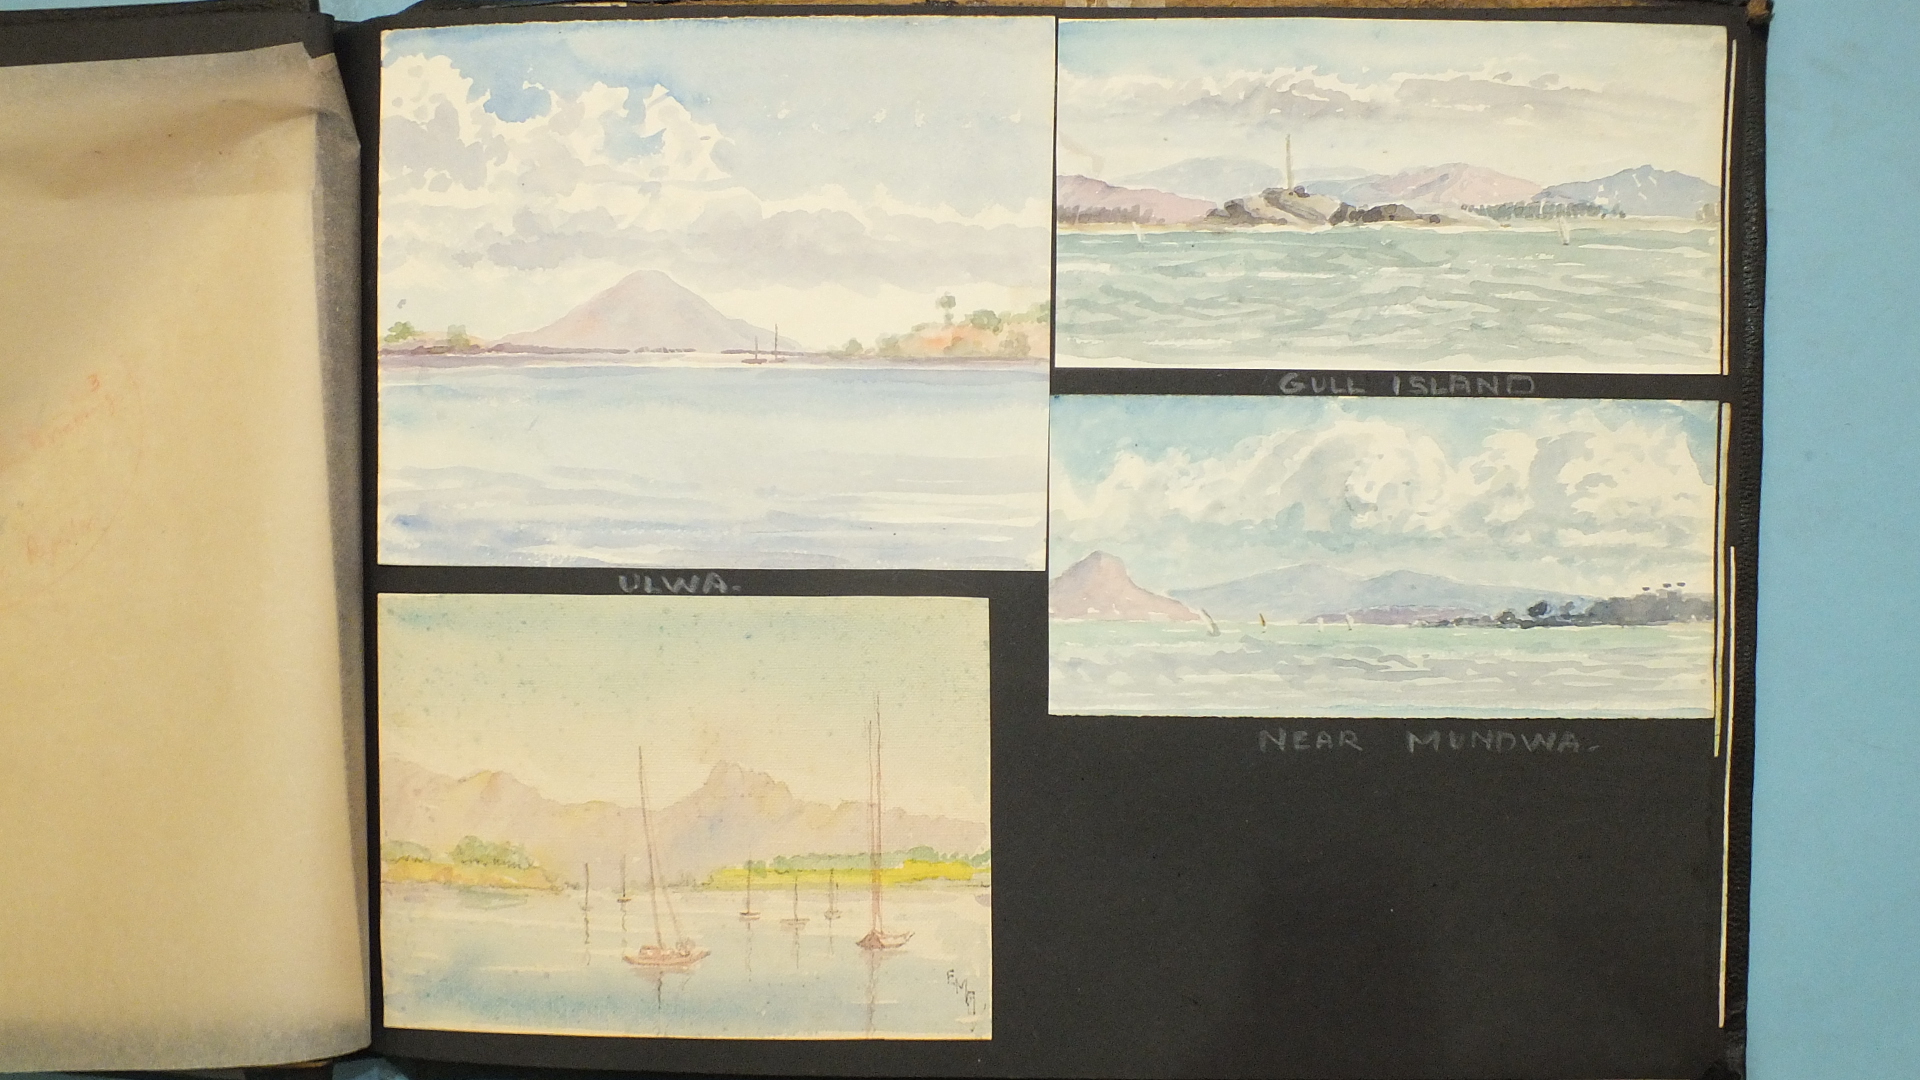 E M Gregson, a book of watercolour sketches of Indian landscapes, including Bandadara, Srinagar, - Image 2 of 5